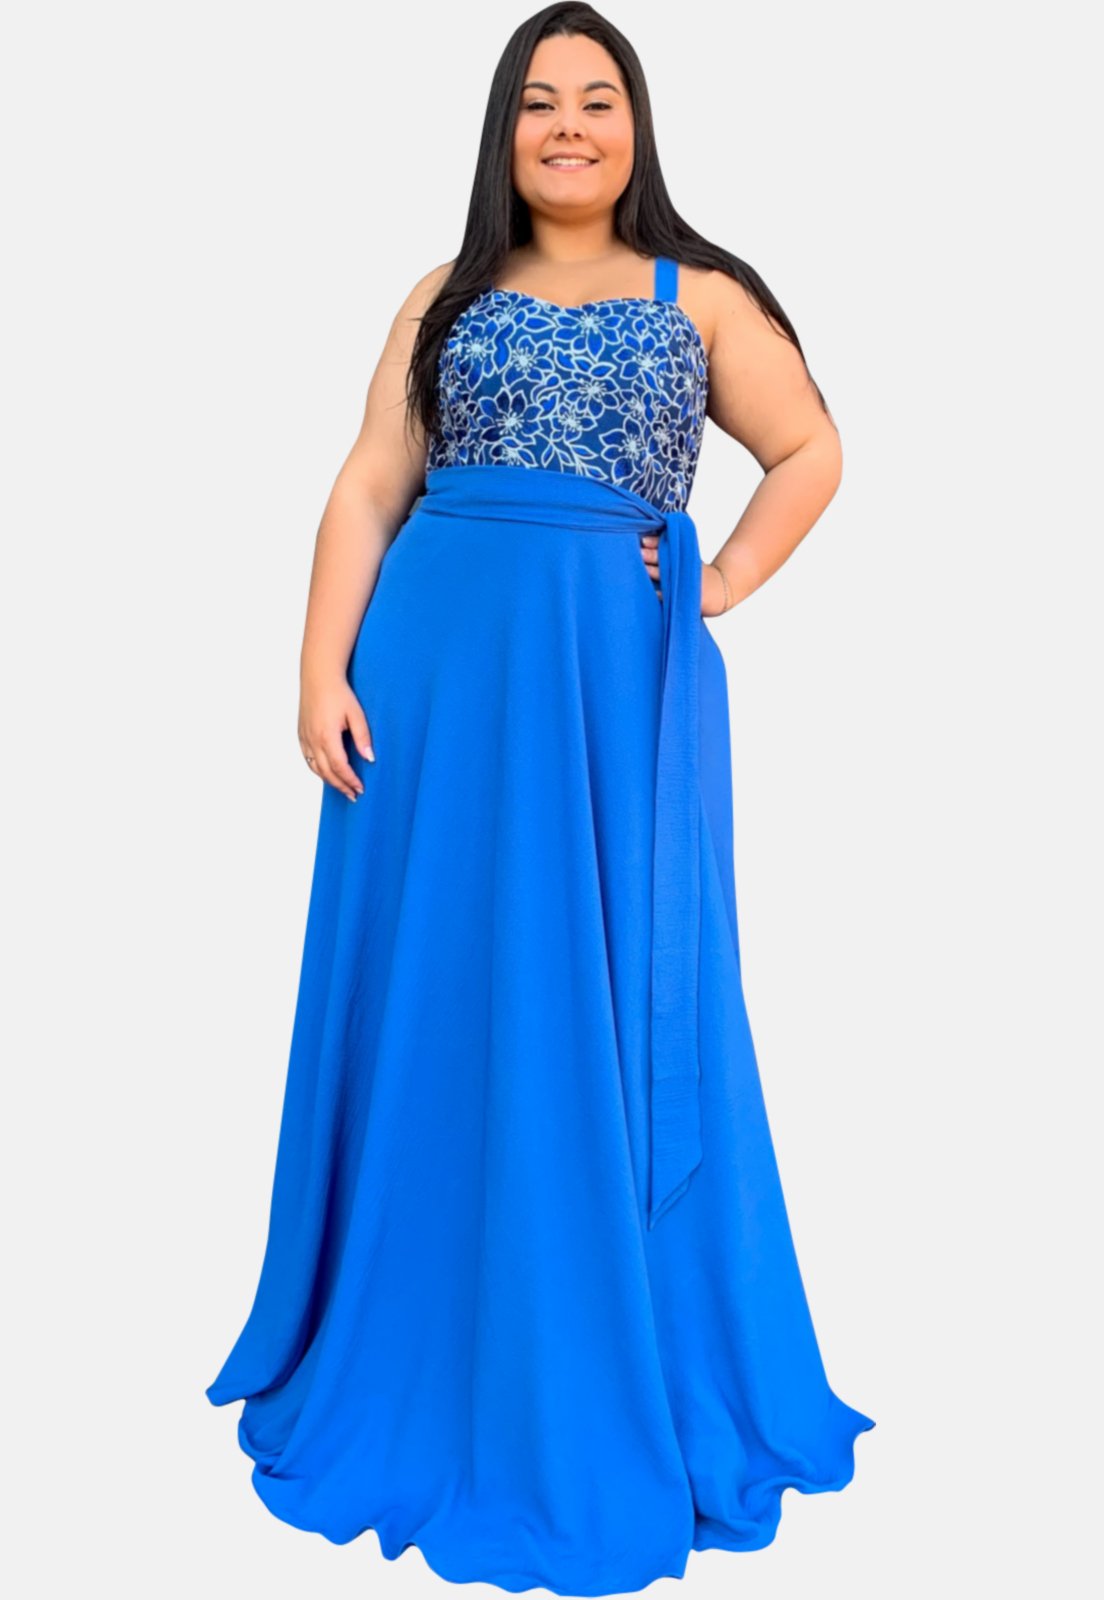 vestido plus size azul claro